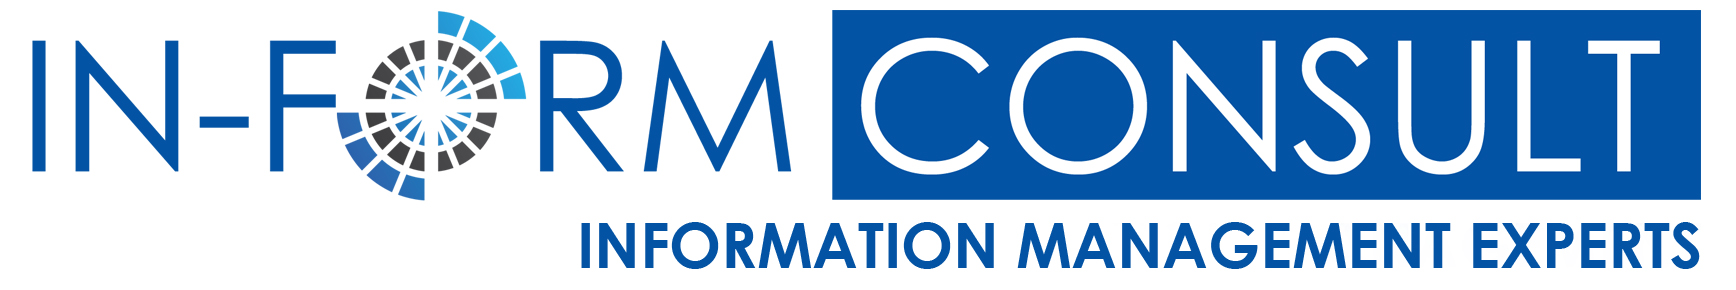 Inform Consult logo